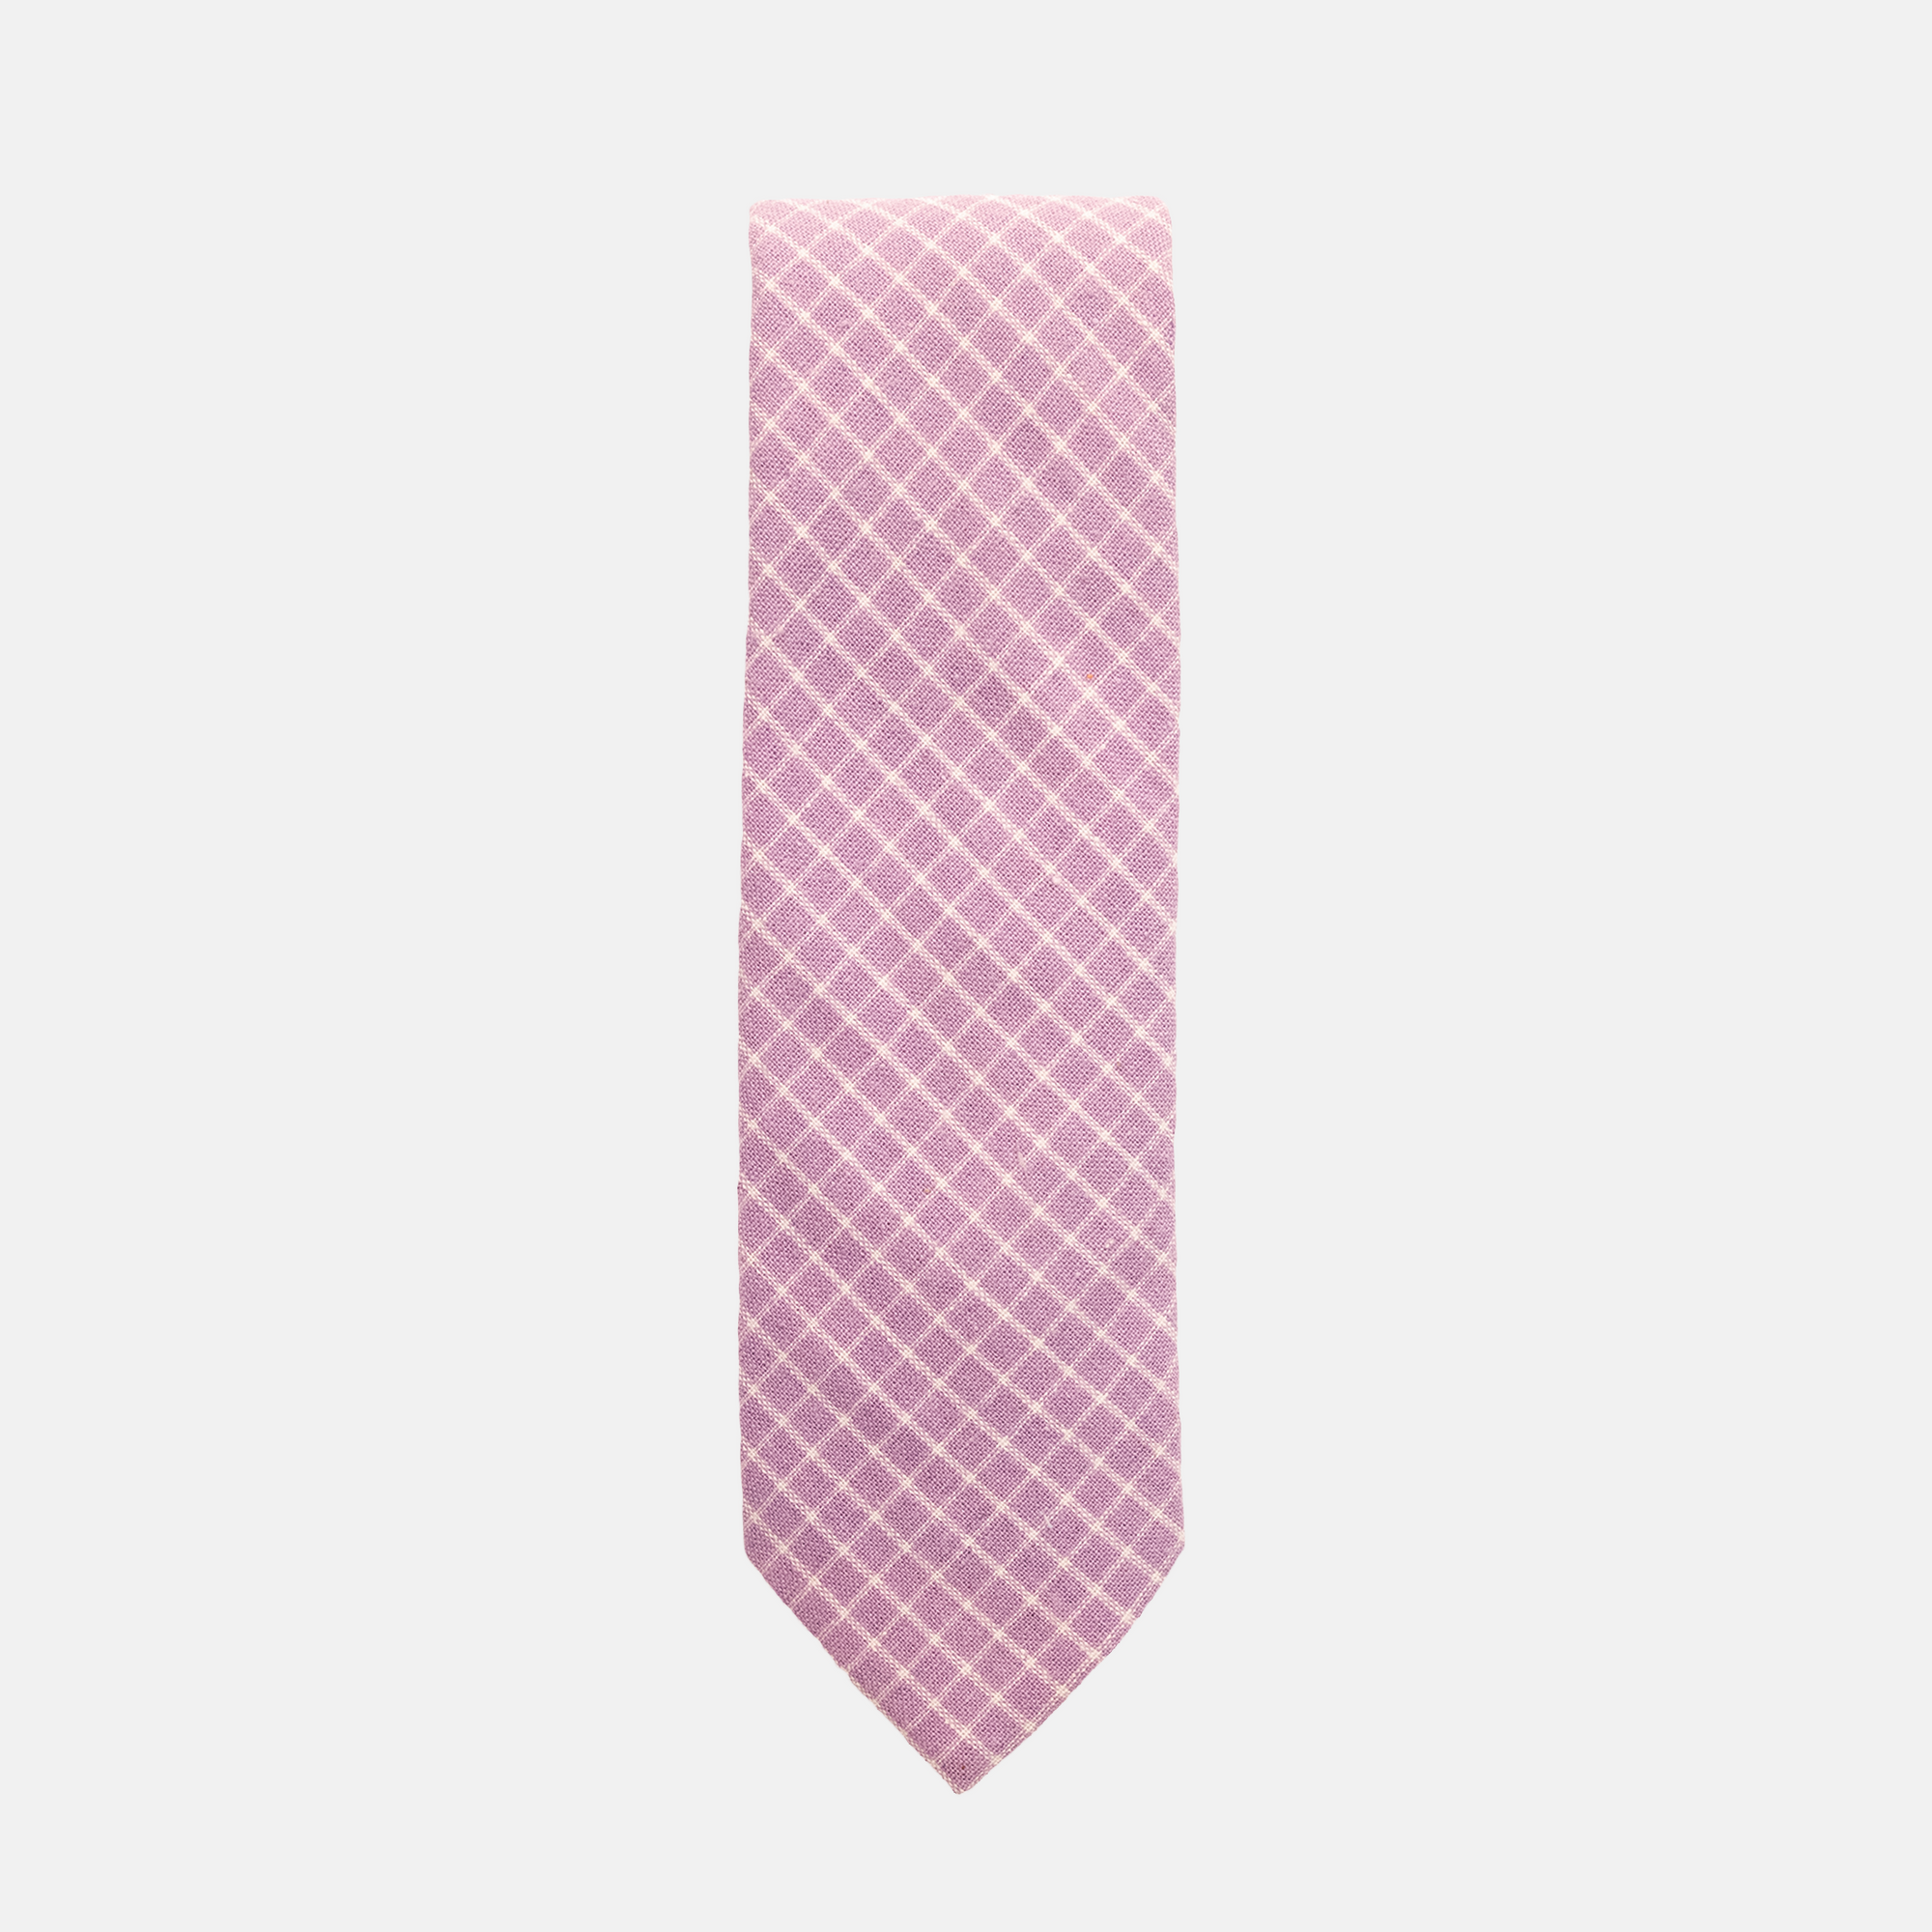 KINGSTON - Men's Tie